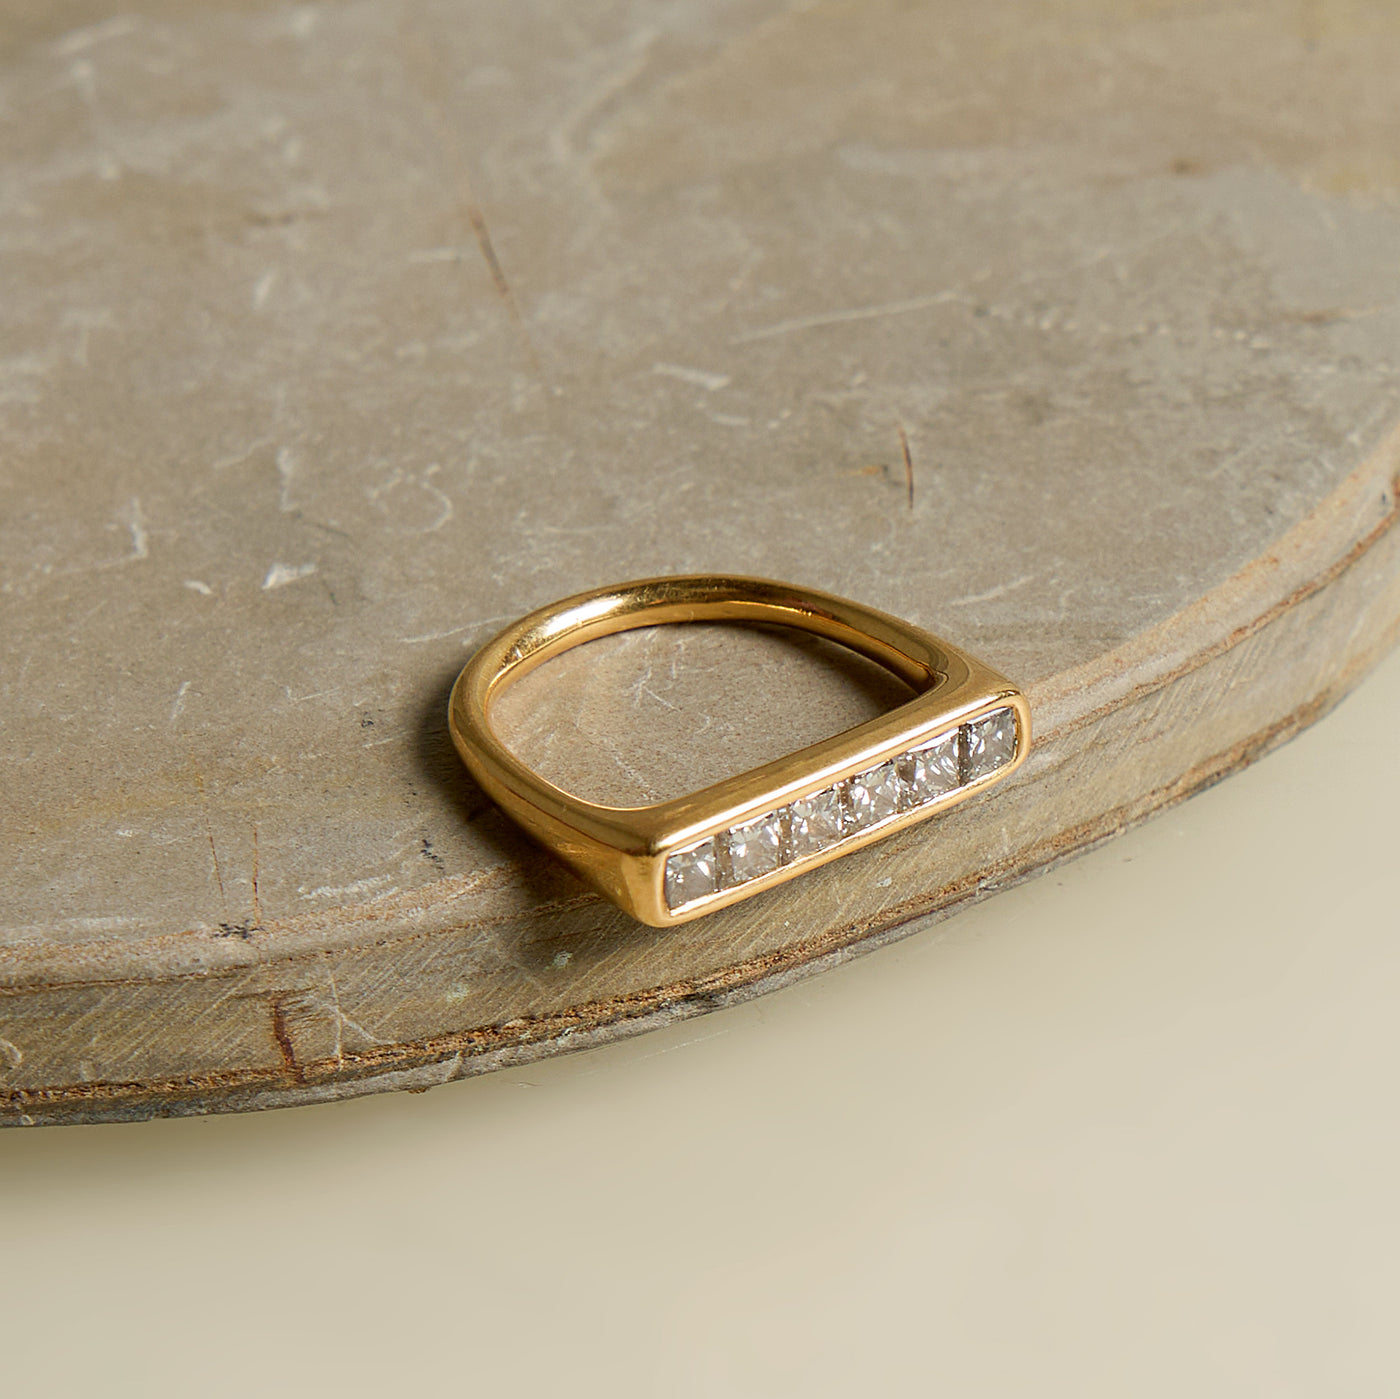 ADI HANDMADE studded ring